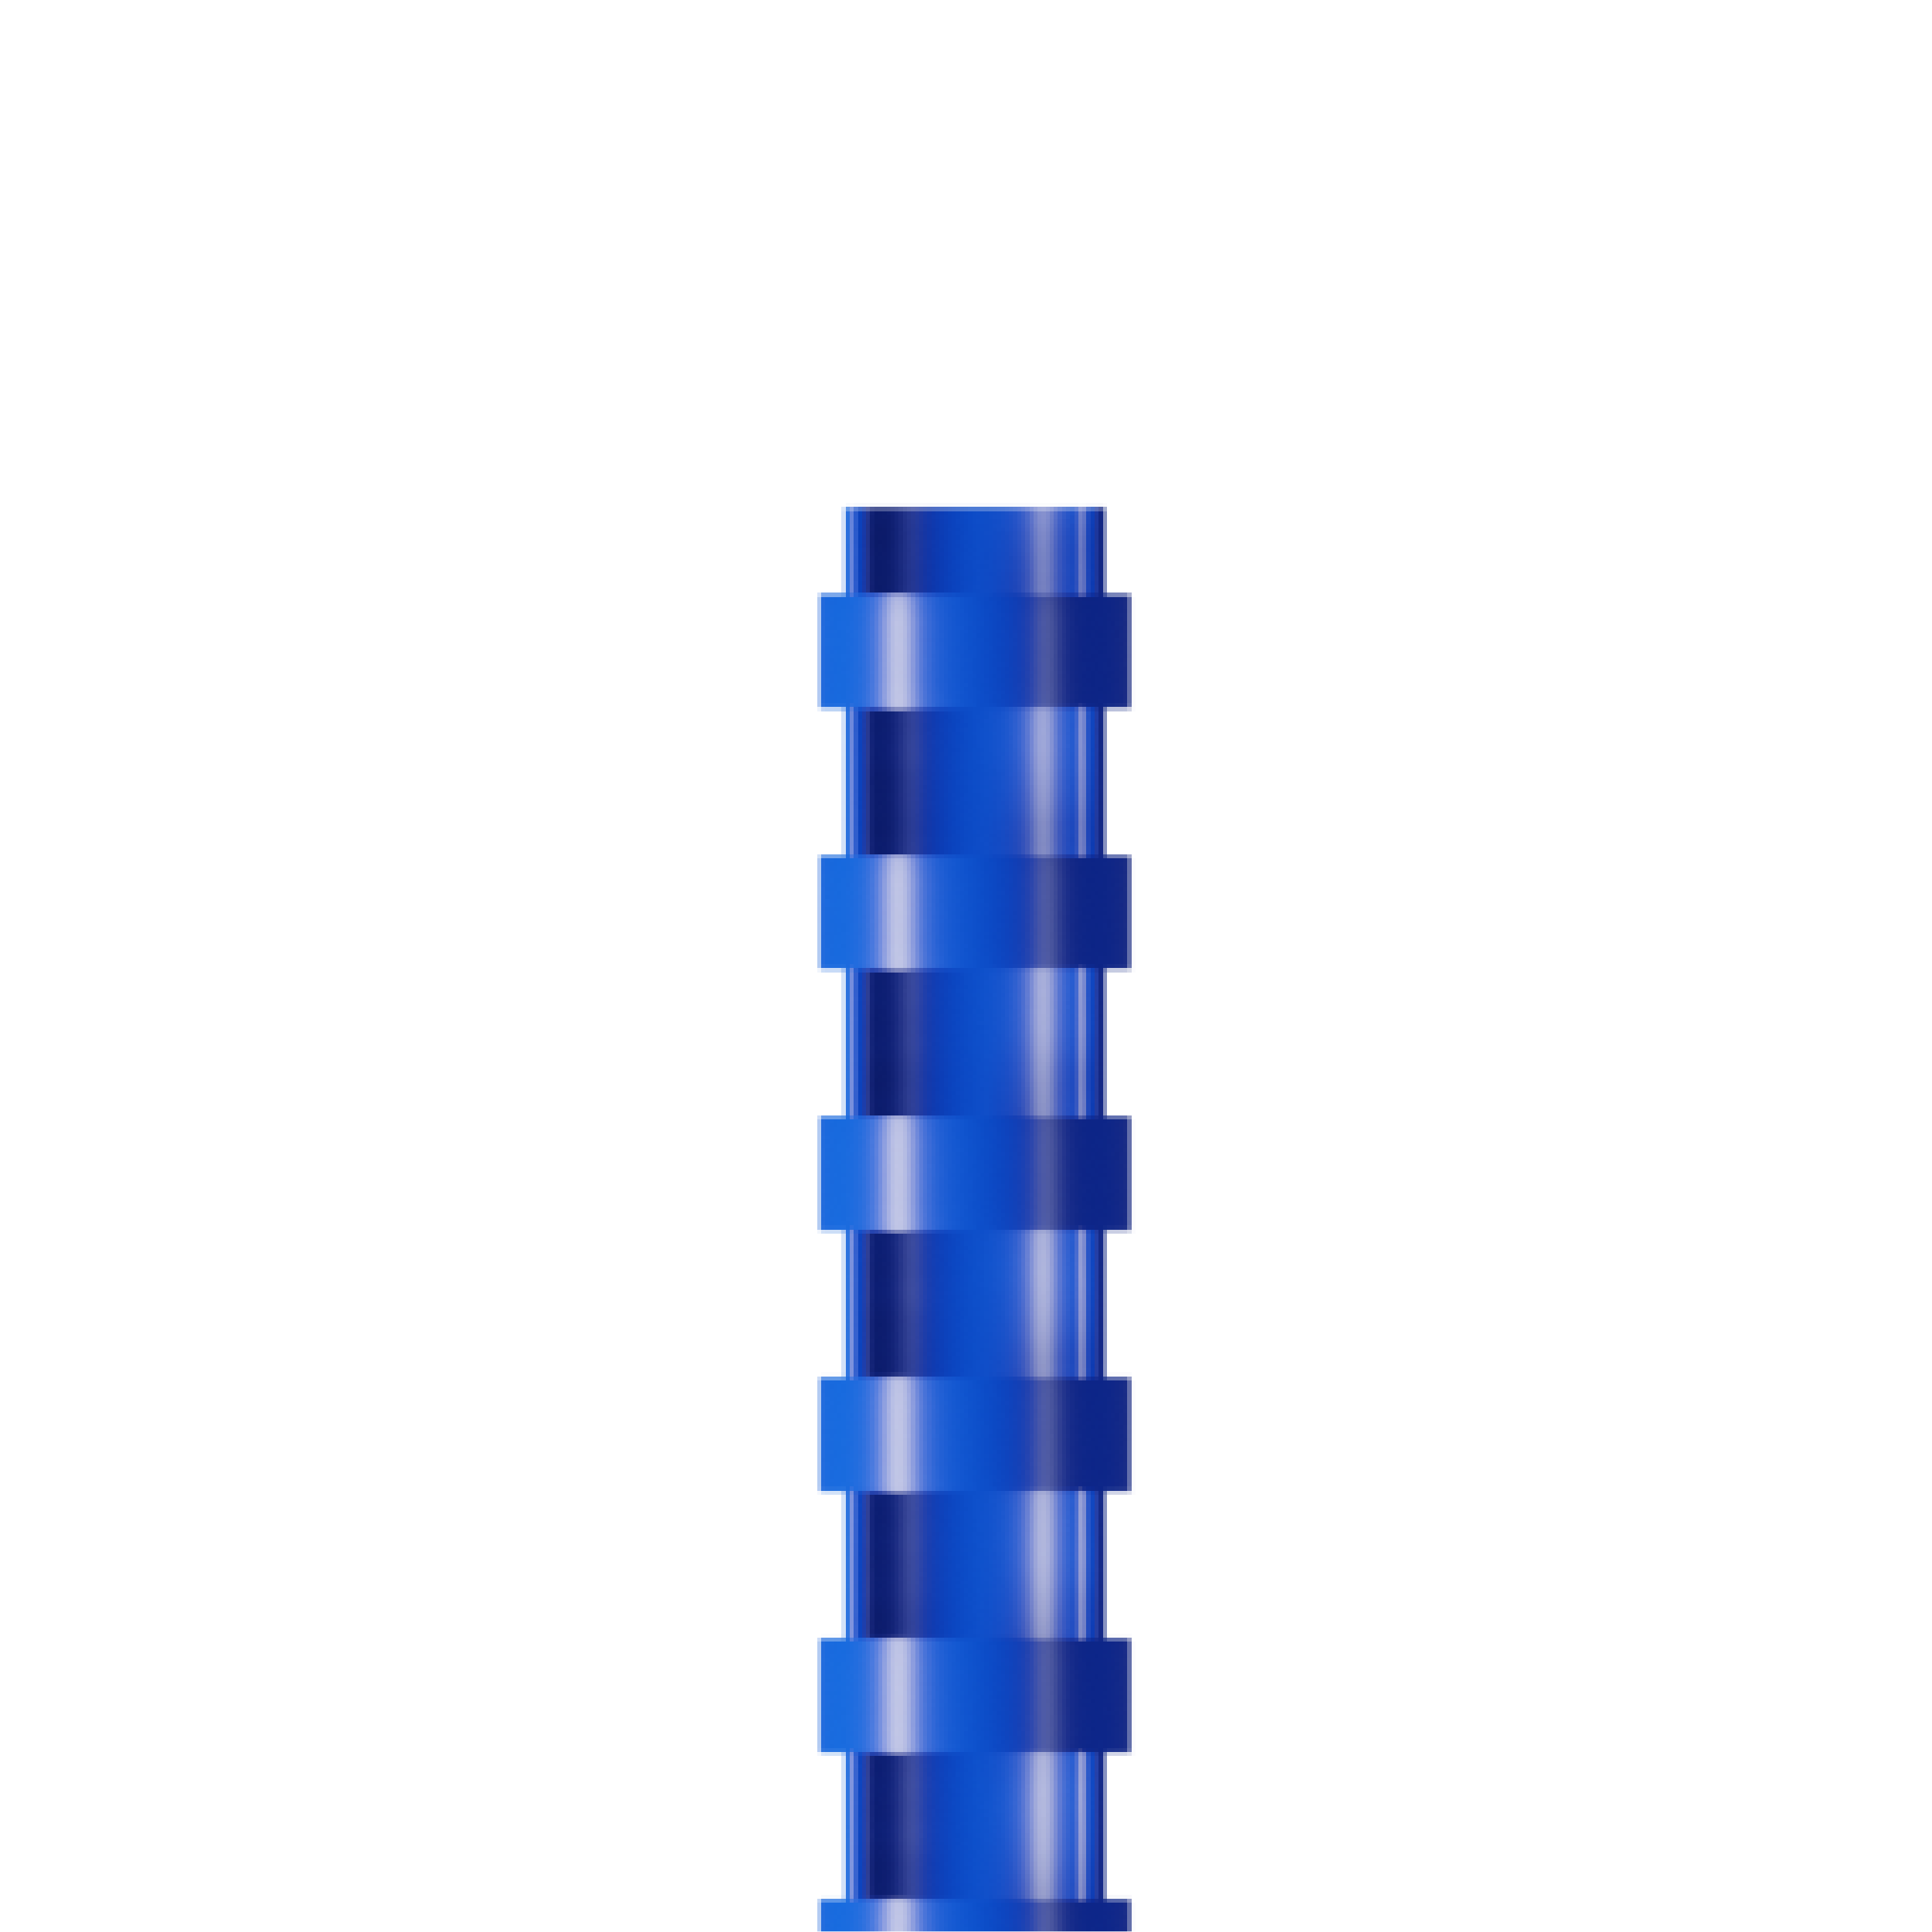 RAADO 16mm Plastic Spiral Binding Comb, Blue